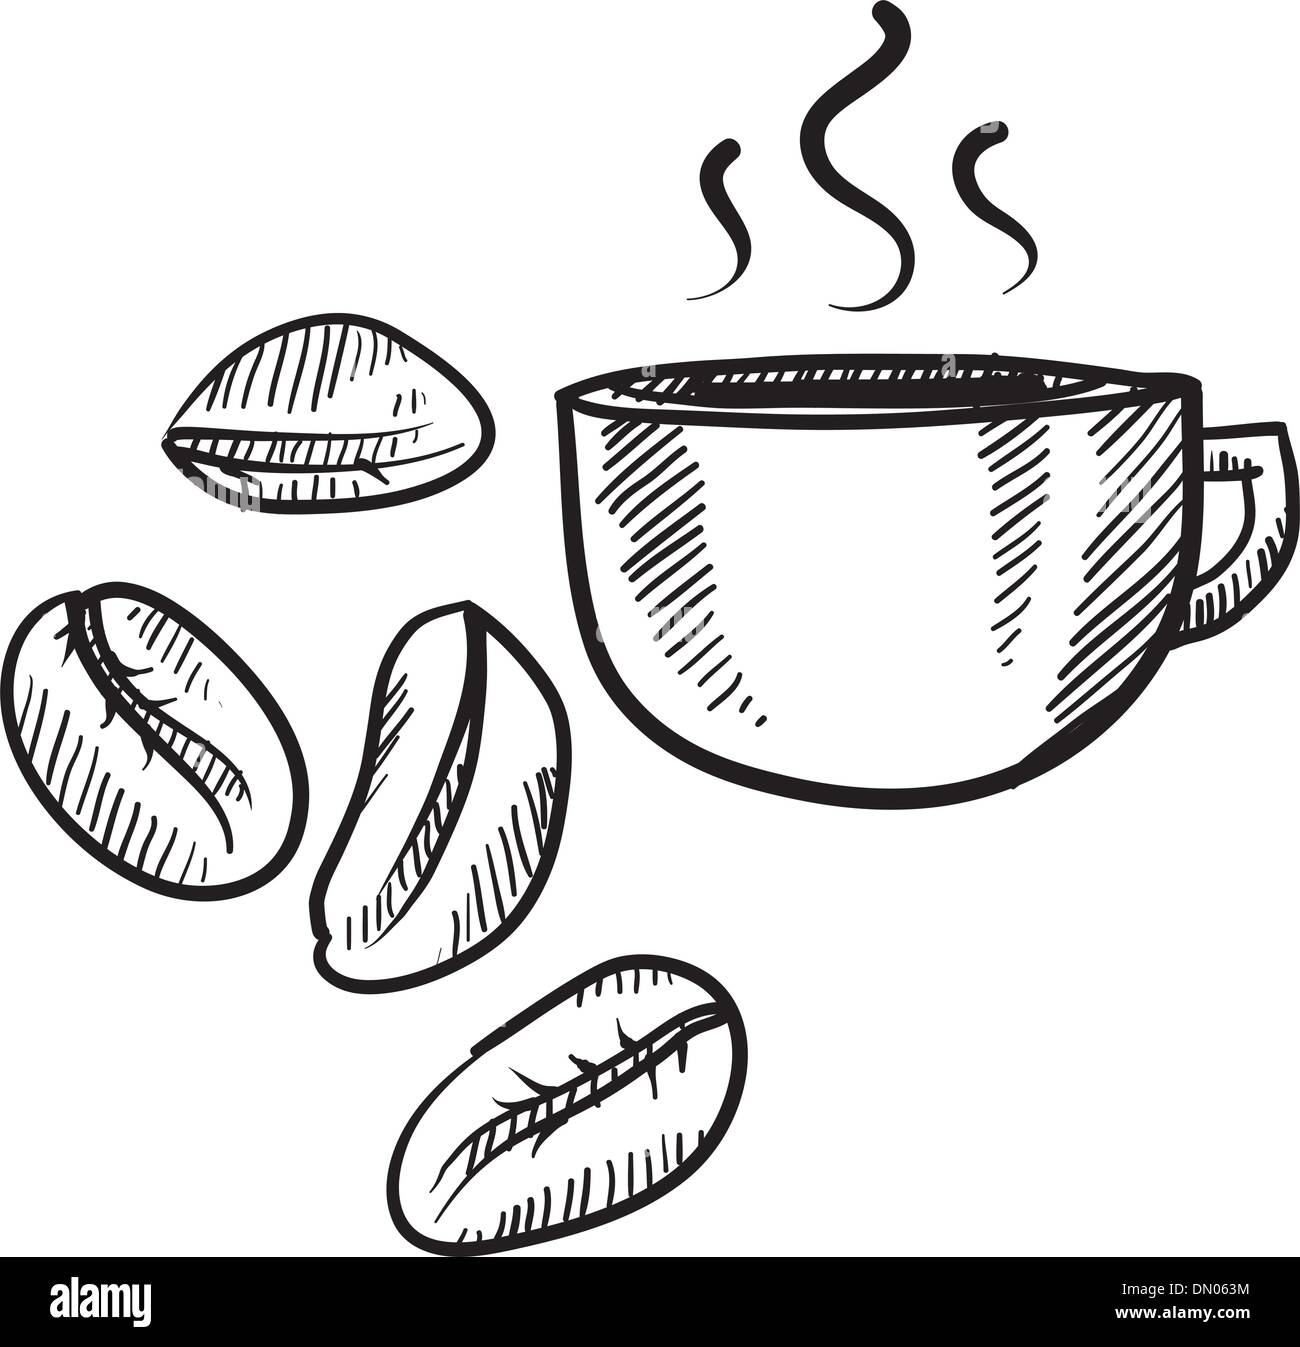 Dibujo de Taza de café para Colorear - Dibujos.net